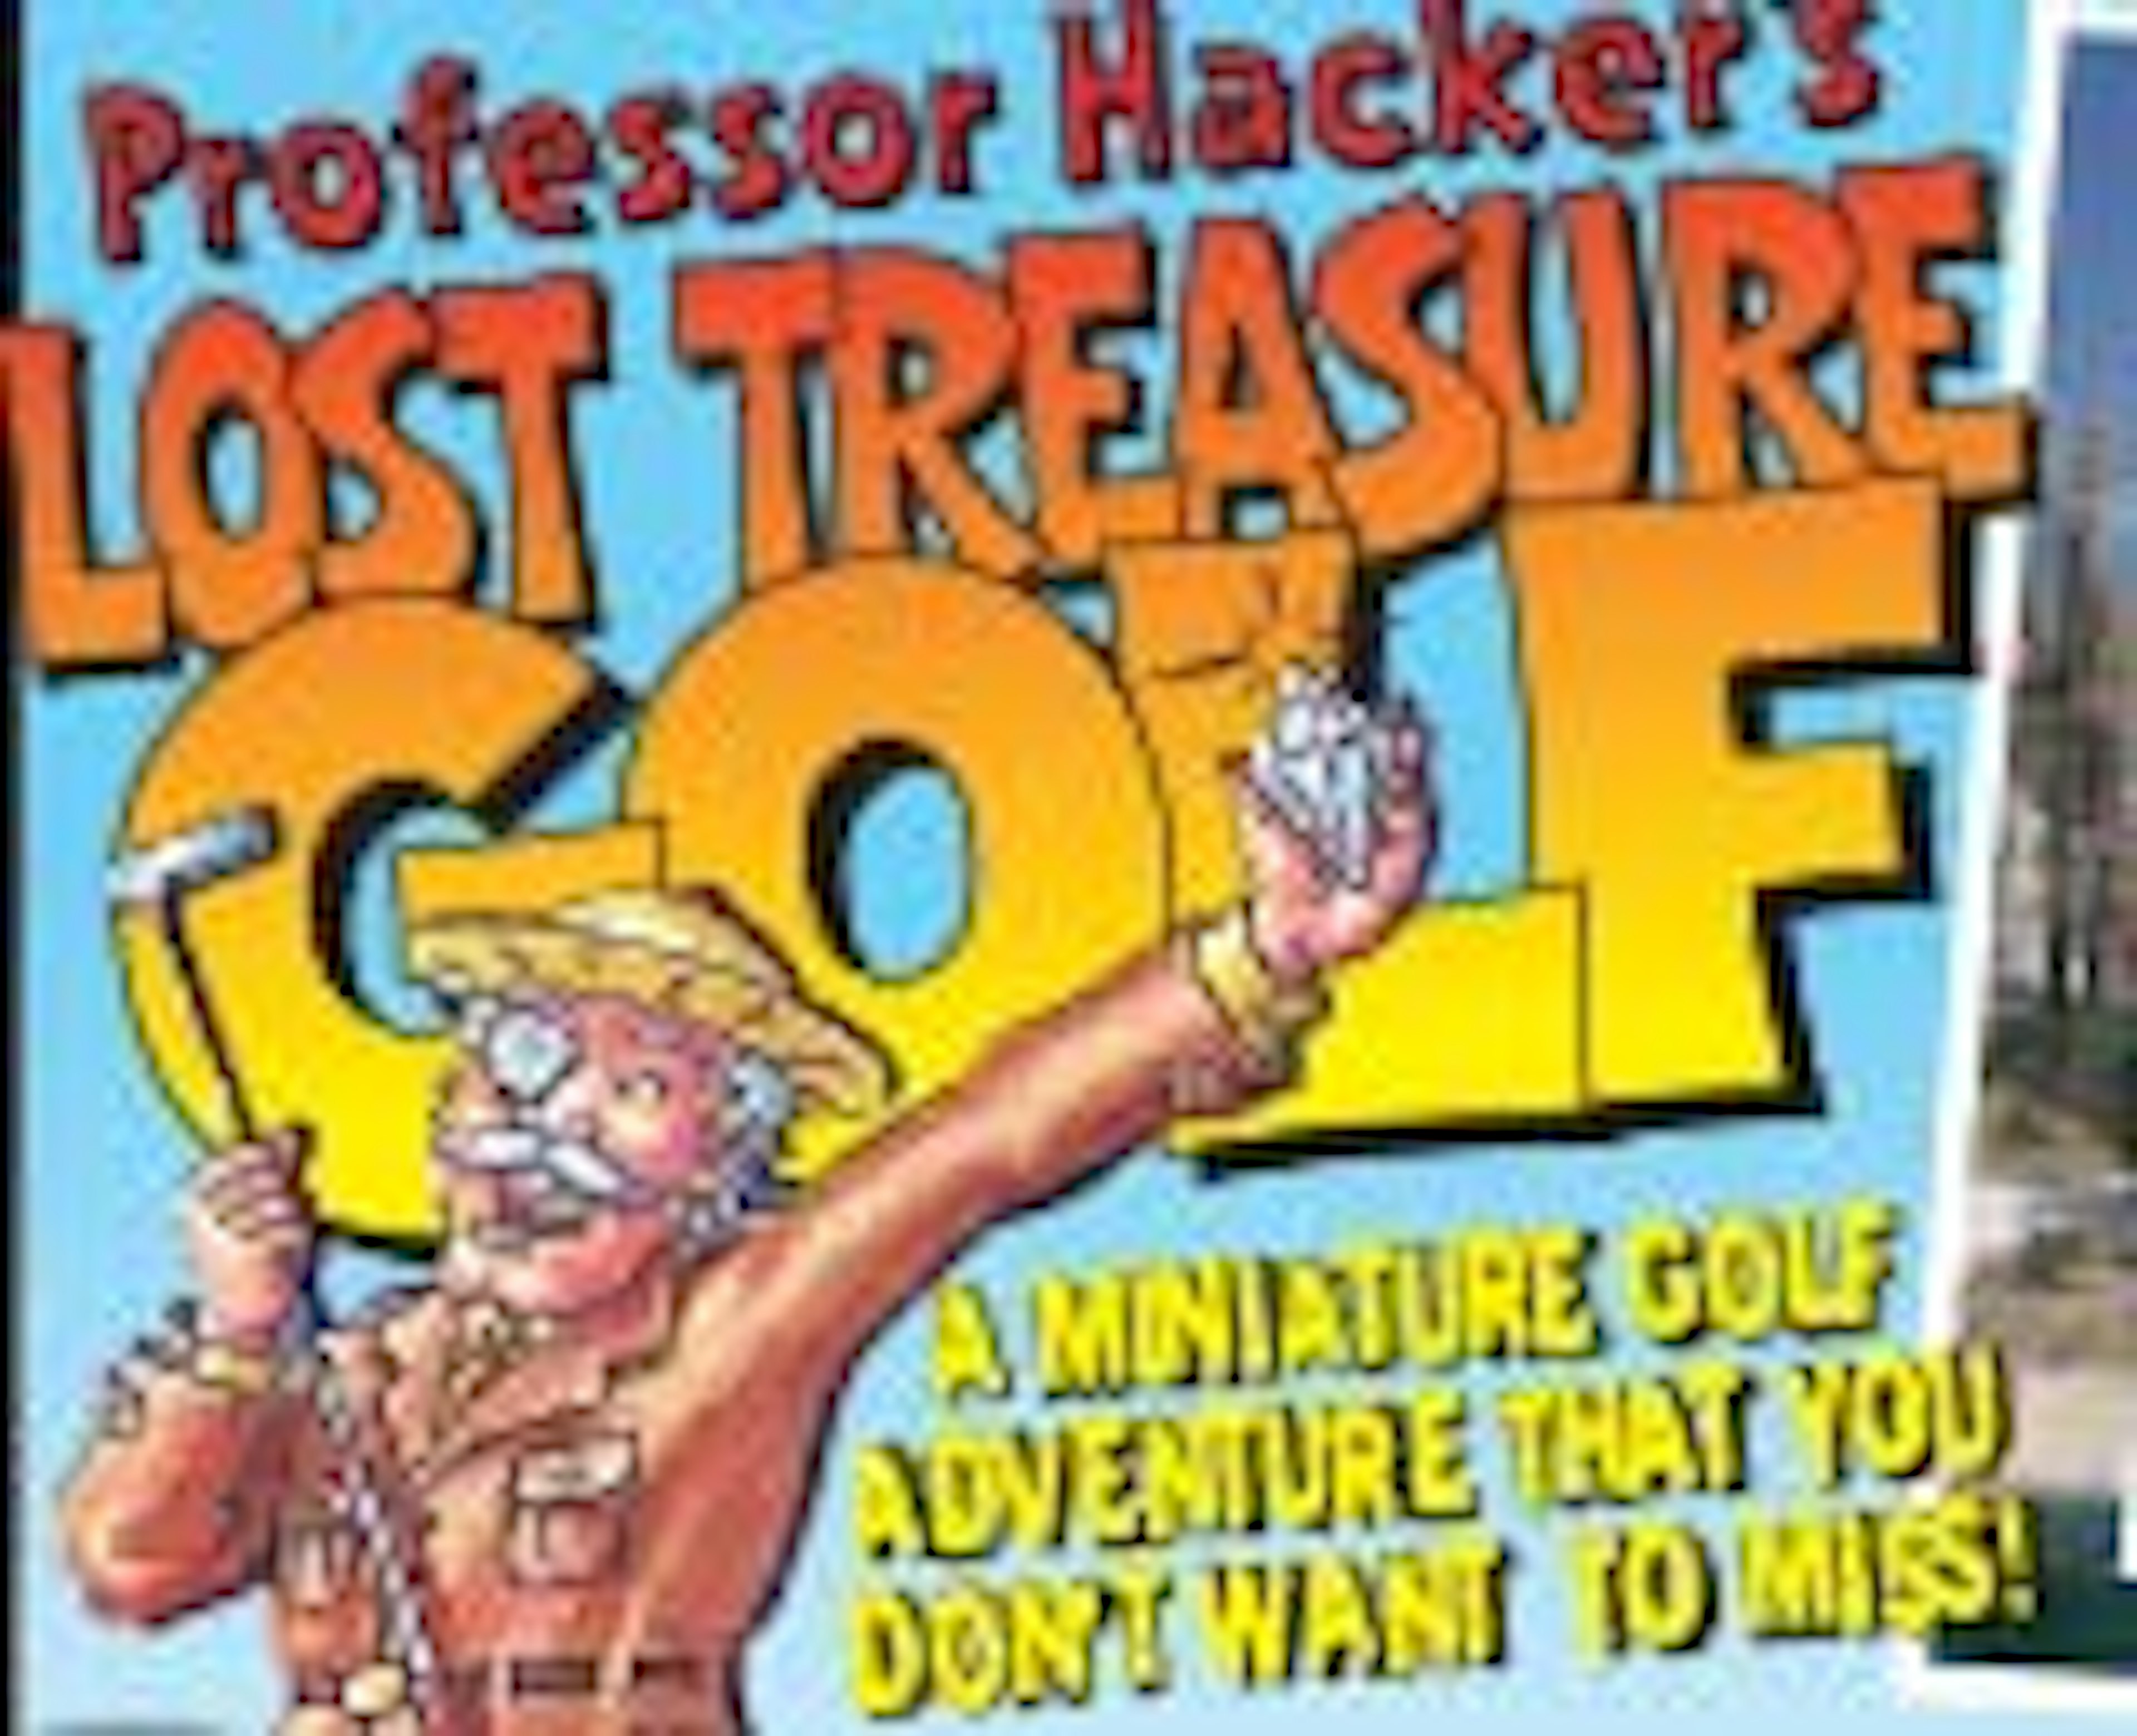 Professor Hacker&#8217;s Lost Treasure Golf